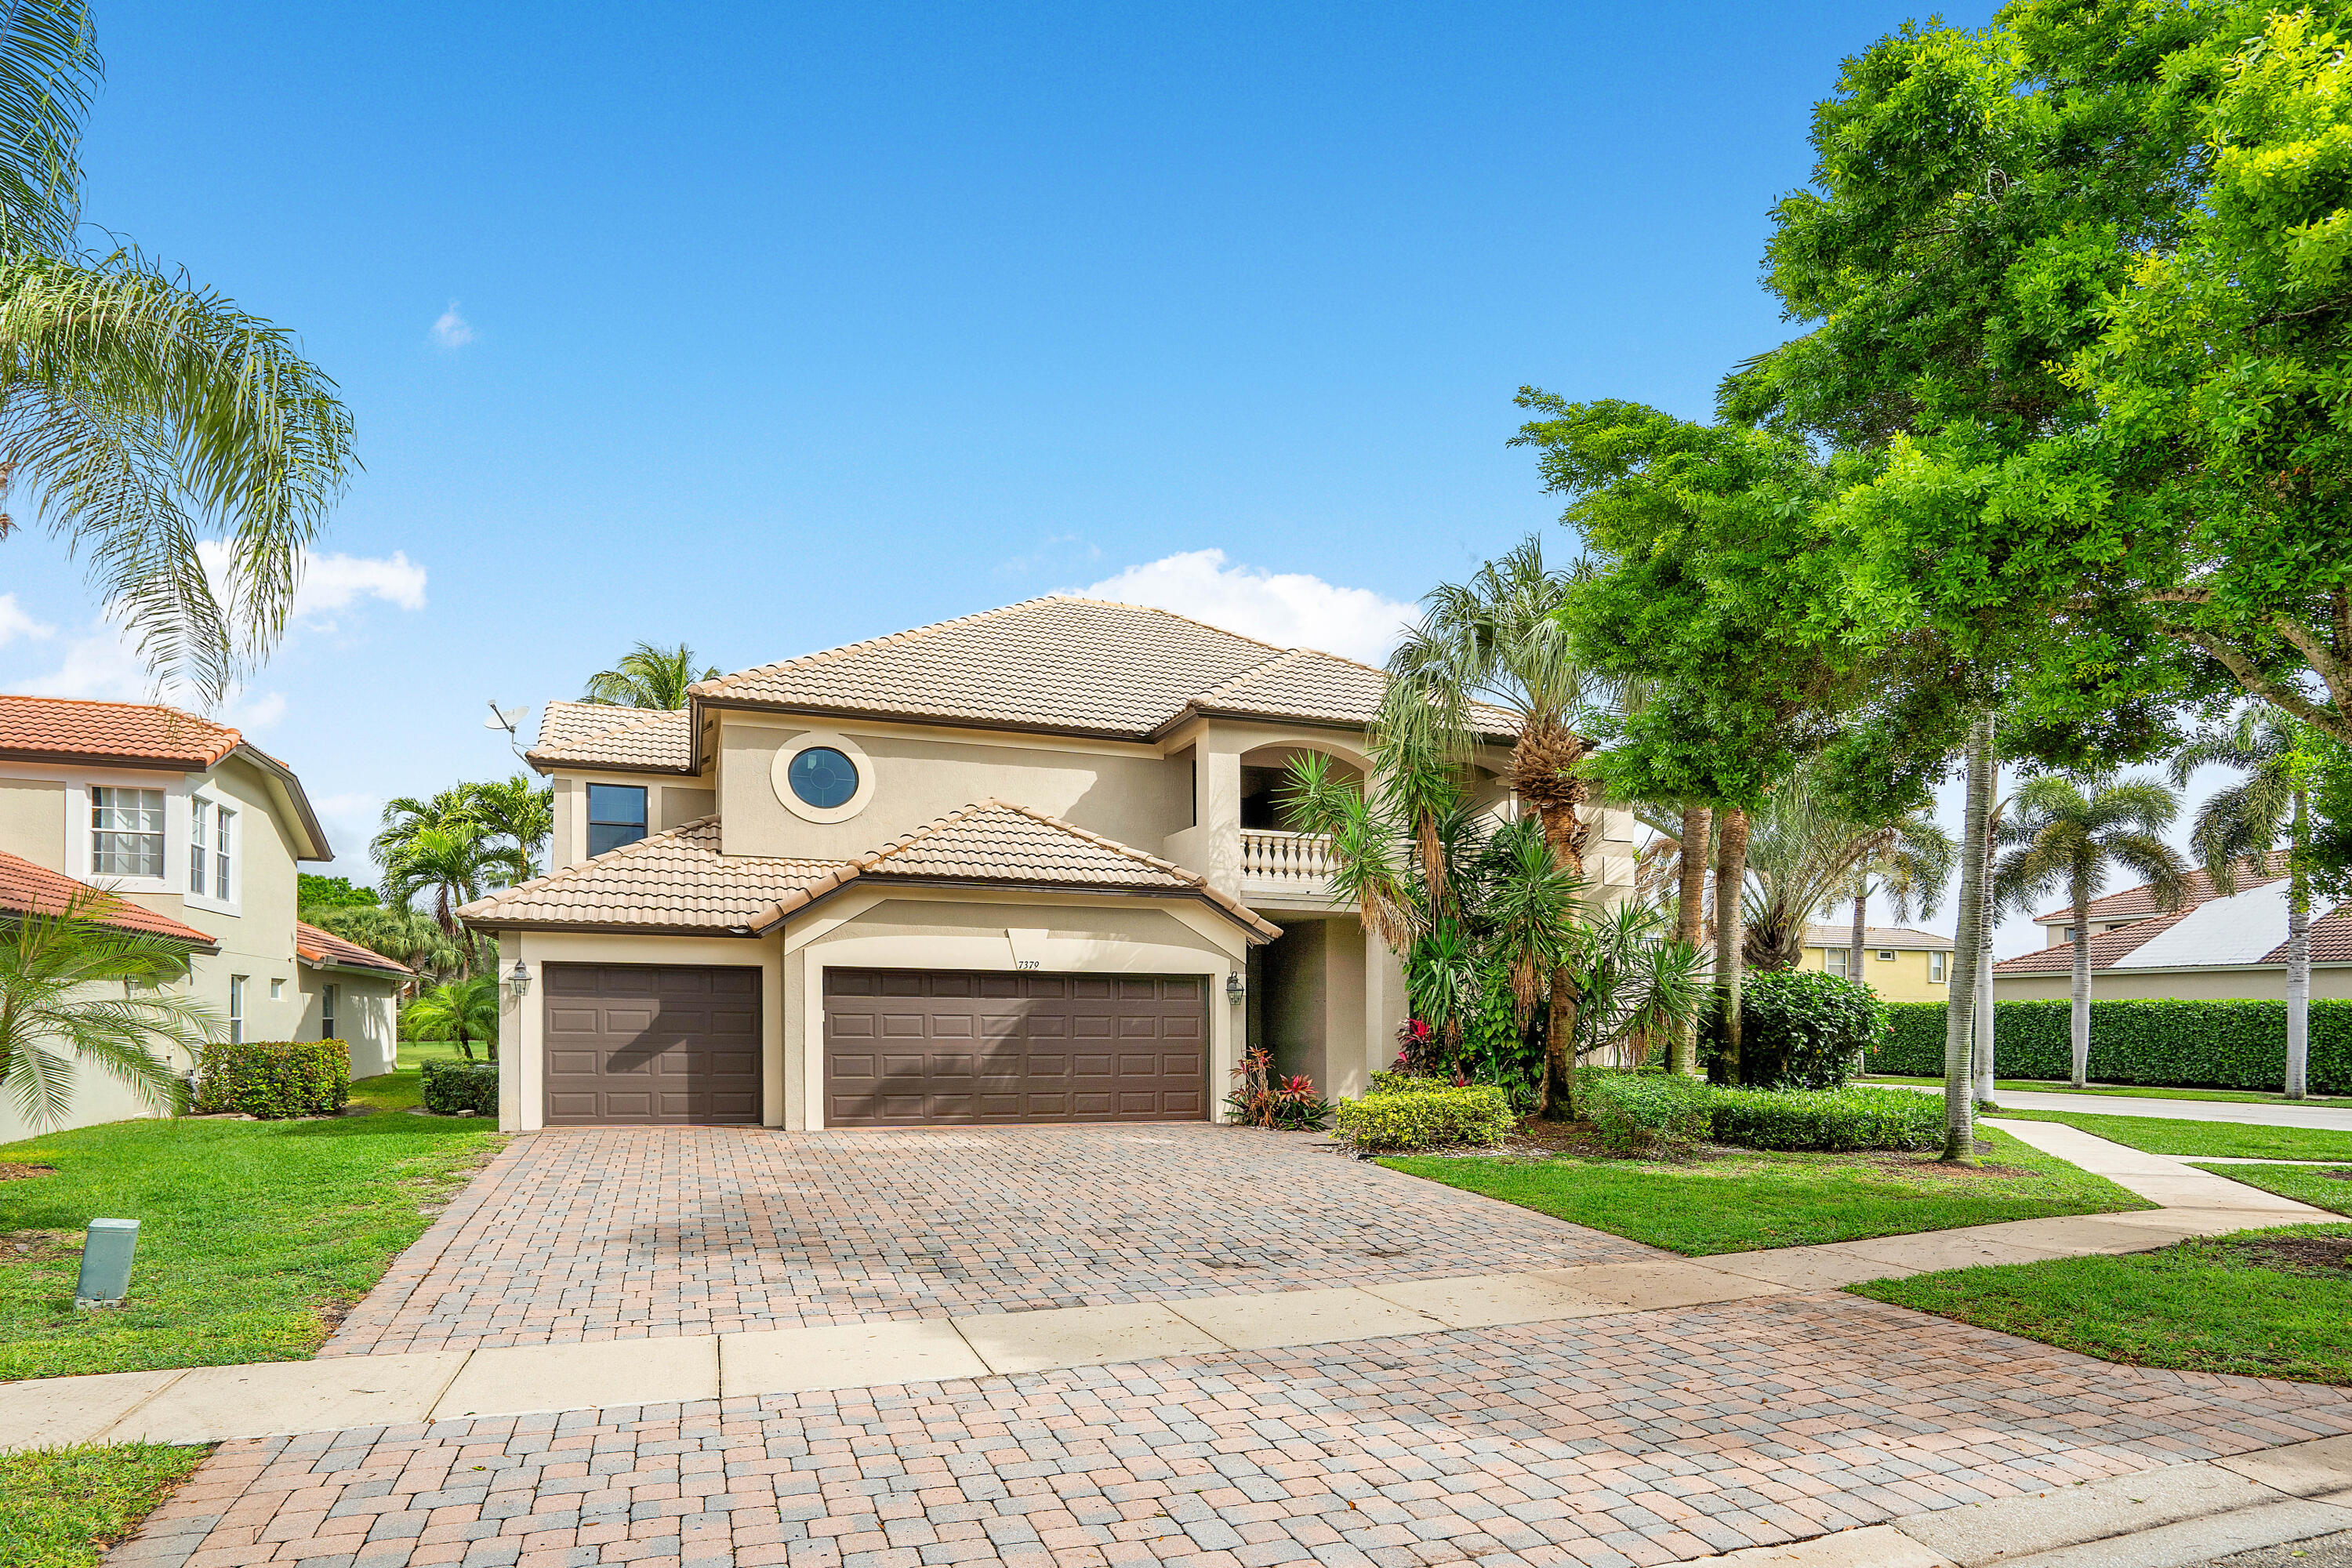 Property for Sale at 7379 Serrano Terrace, Delray Beach, Palm Beach County, Florida - Bedrooms: 5 
Bathrooms: 4  - $788,000